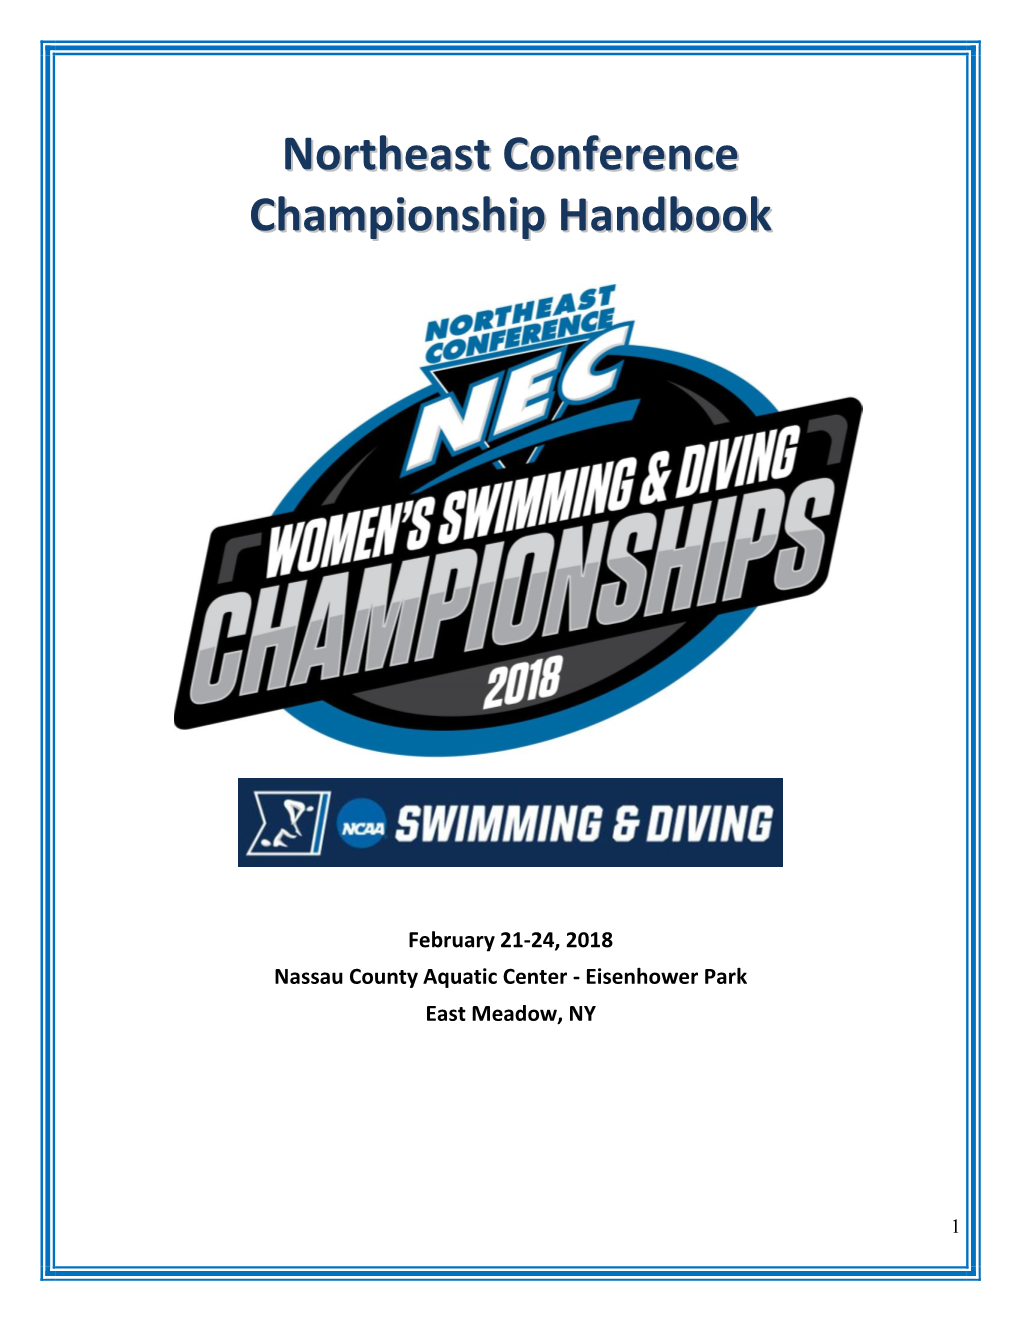 Northeast Conference Championship Handbook